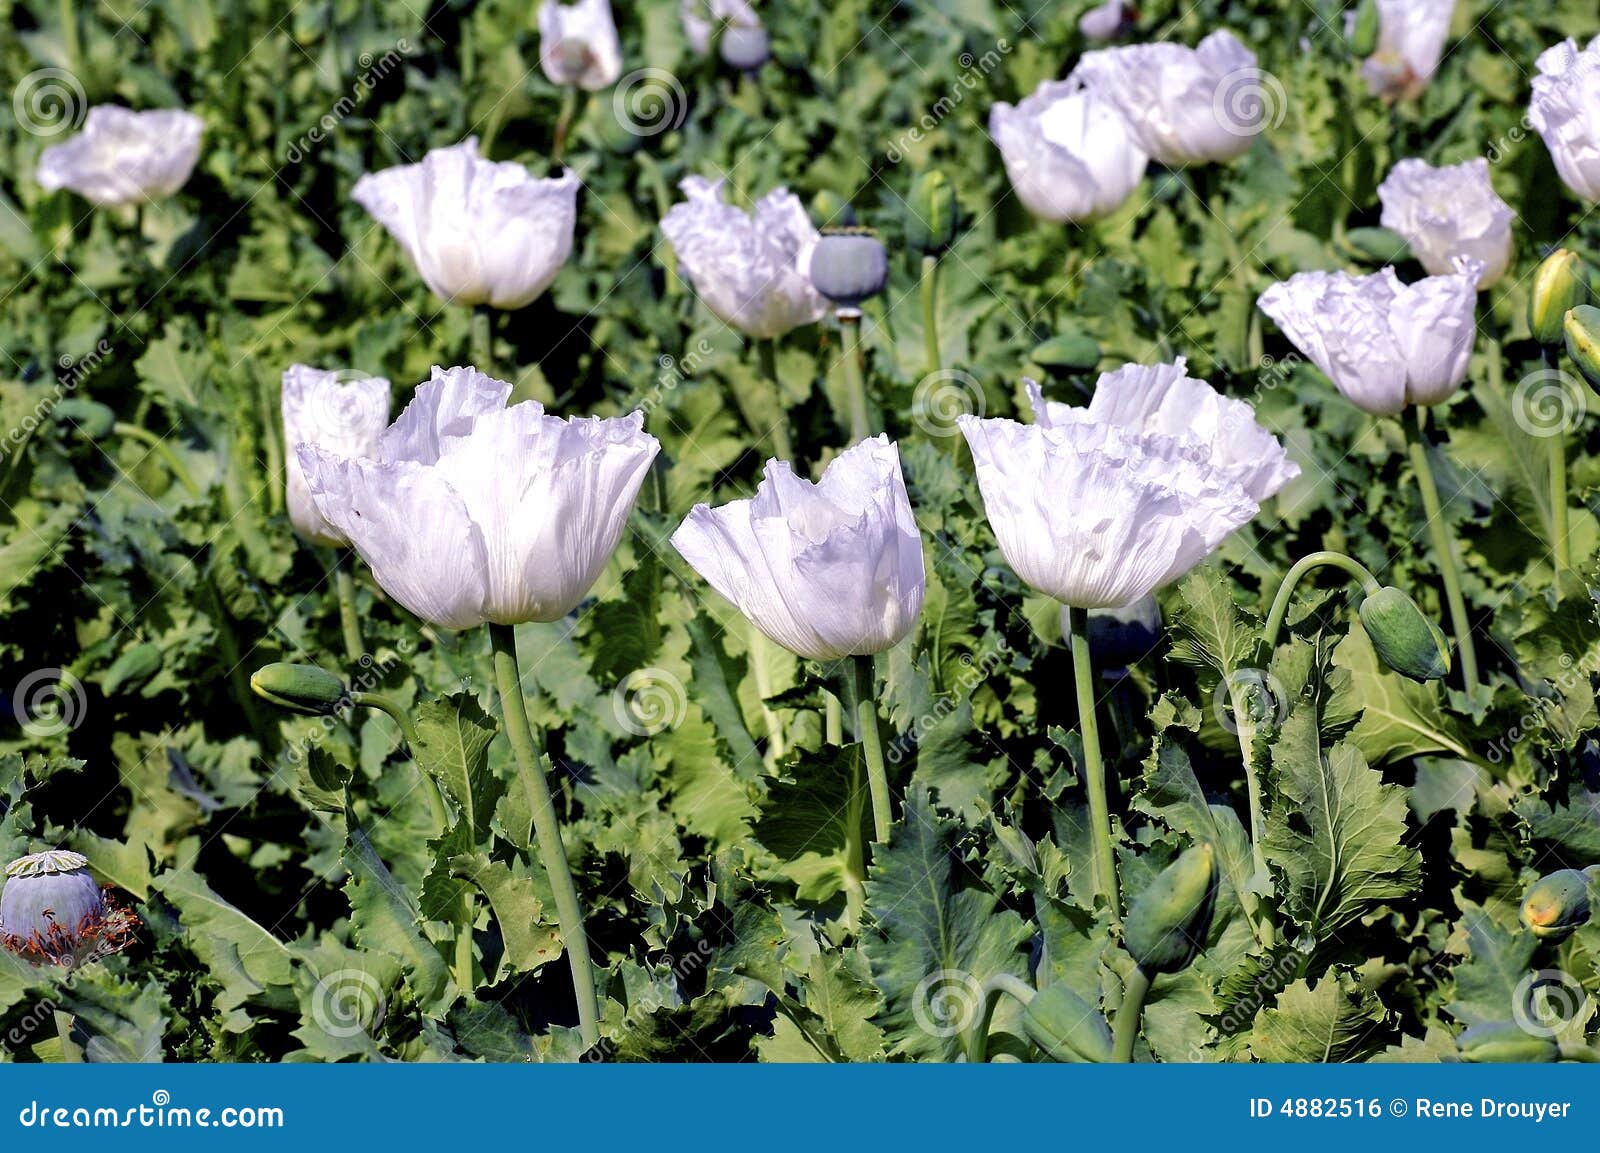 india, bijaipur: opium poppy field